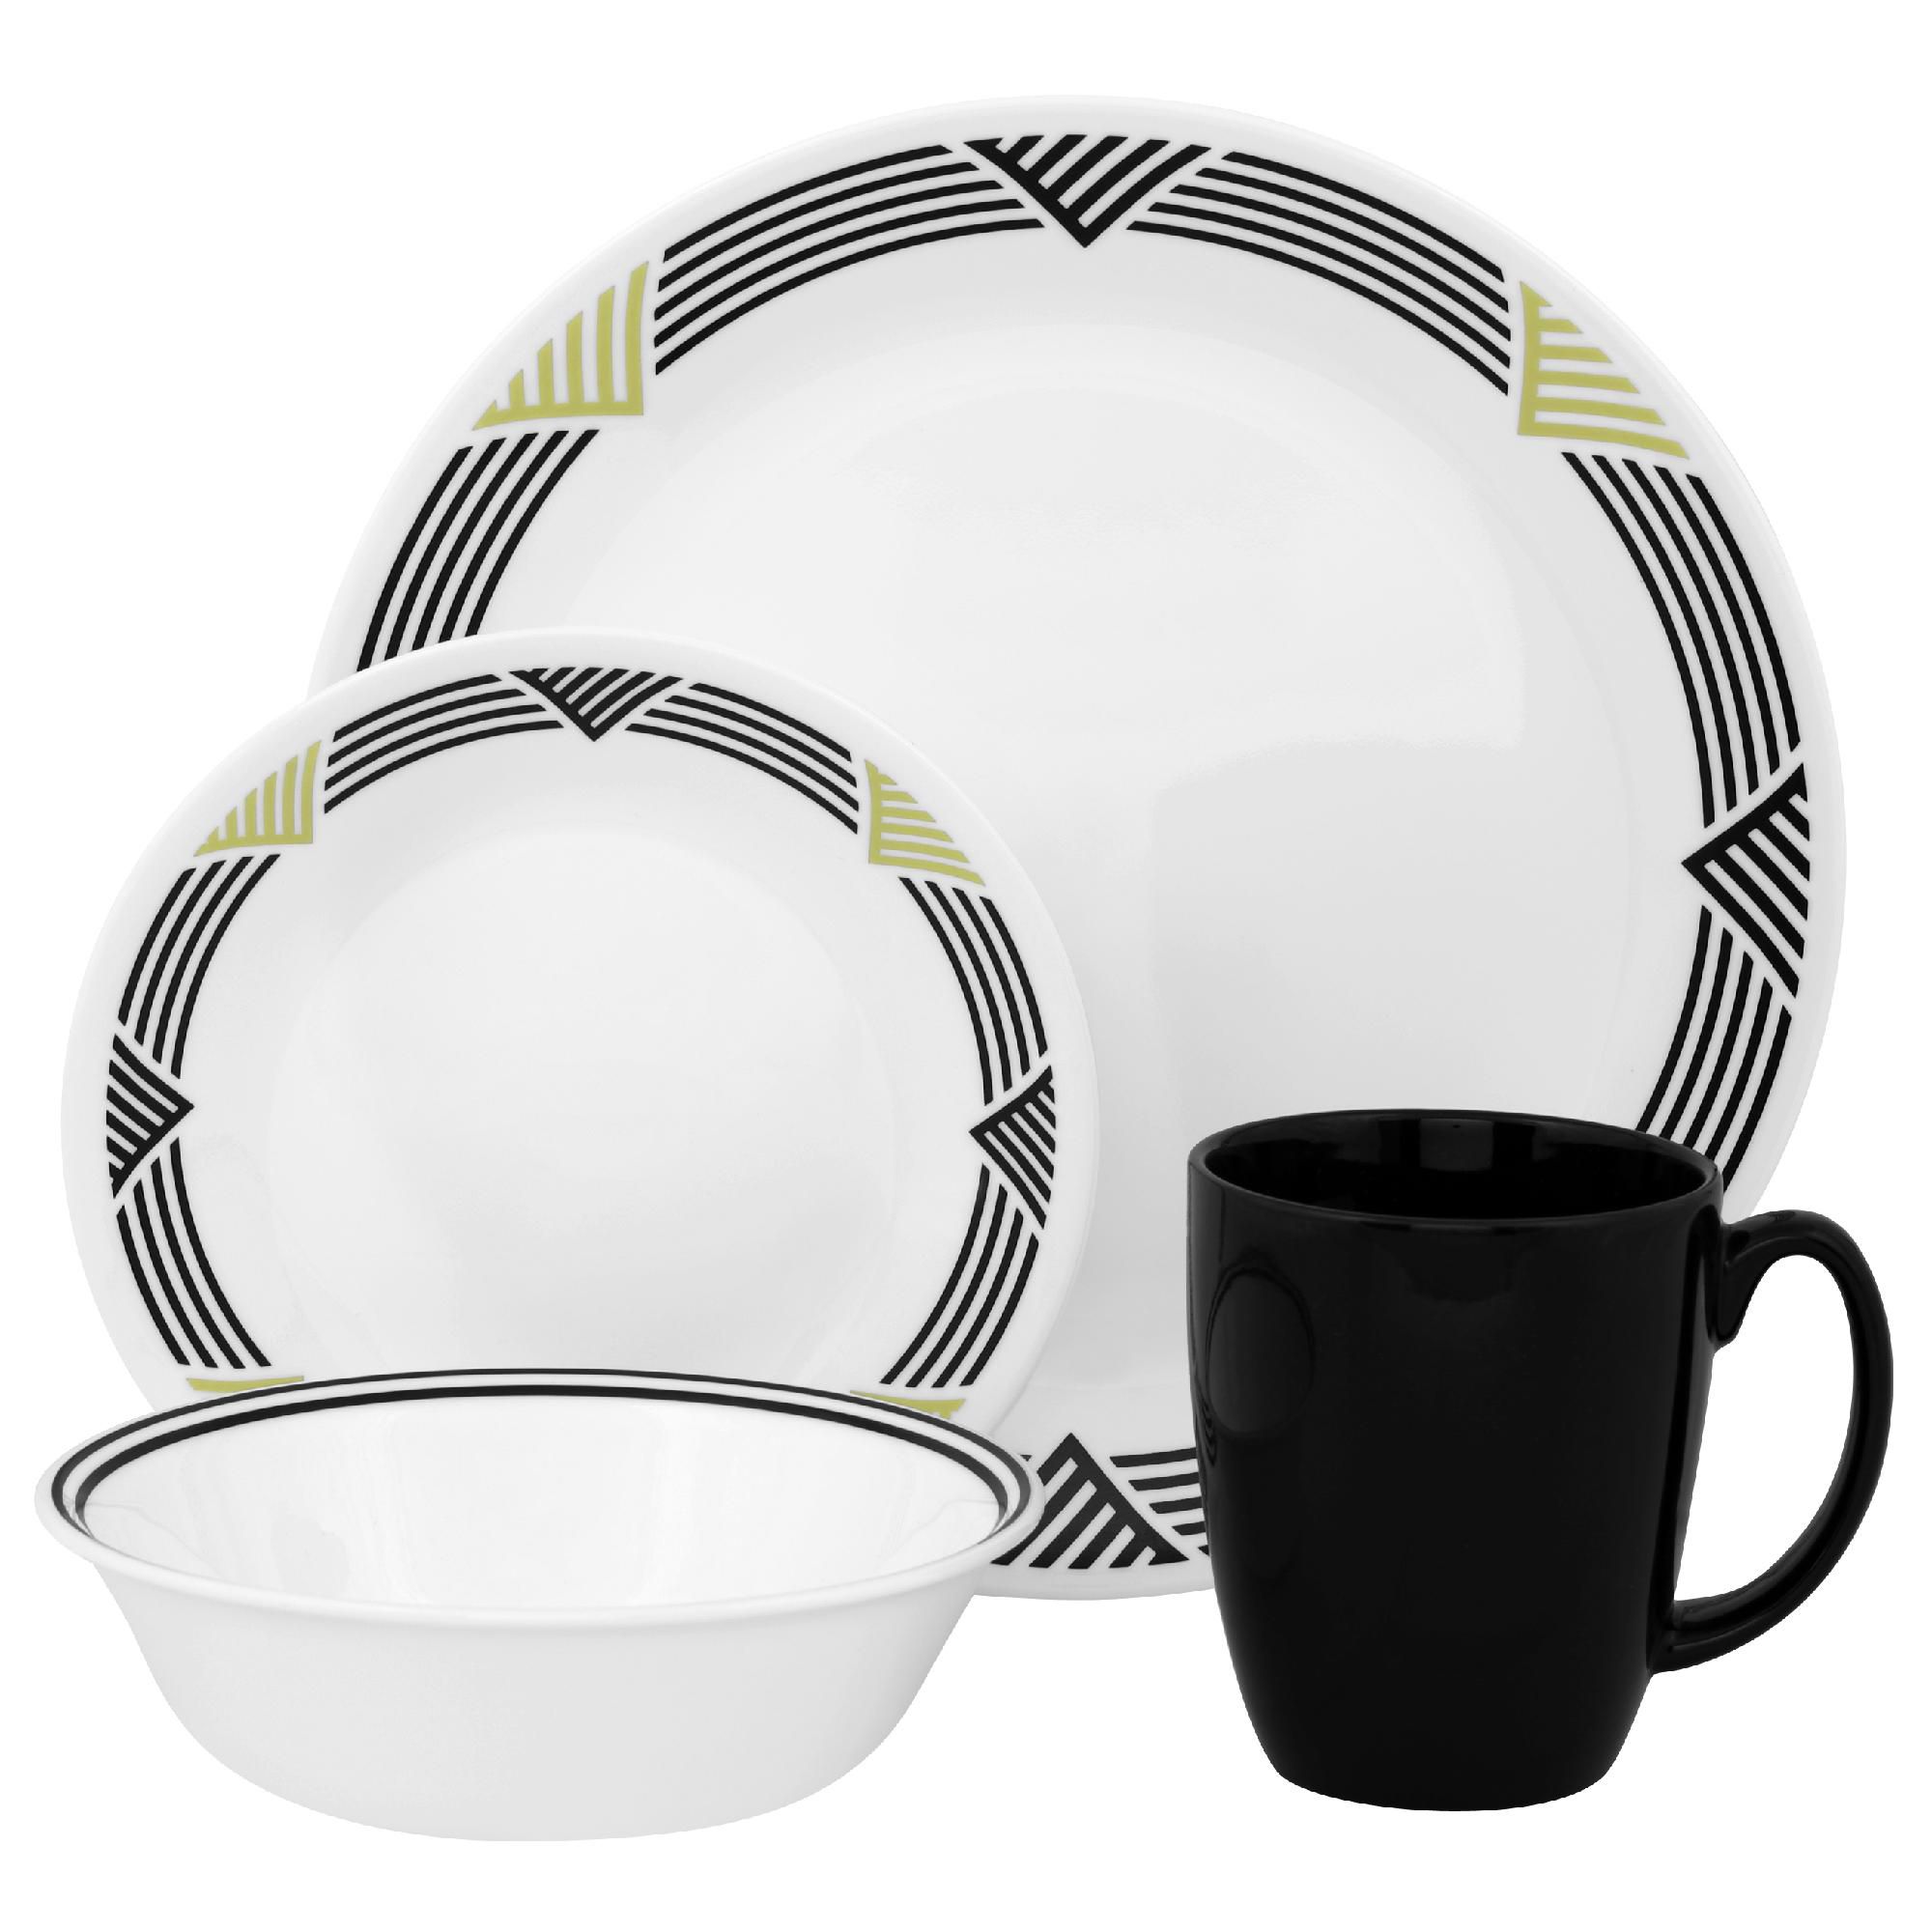 Livingware Global Stripes 16-Piece Dinnerware Set